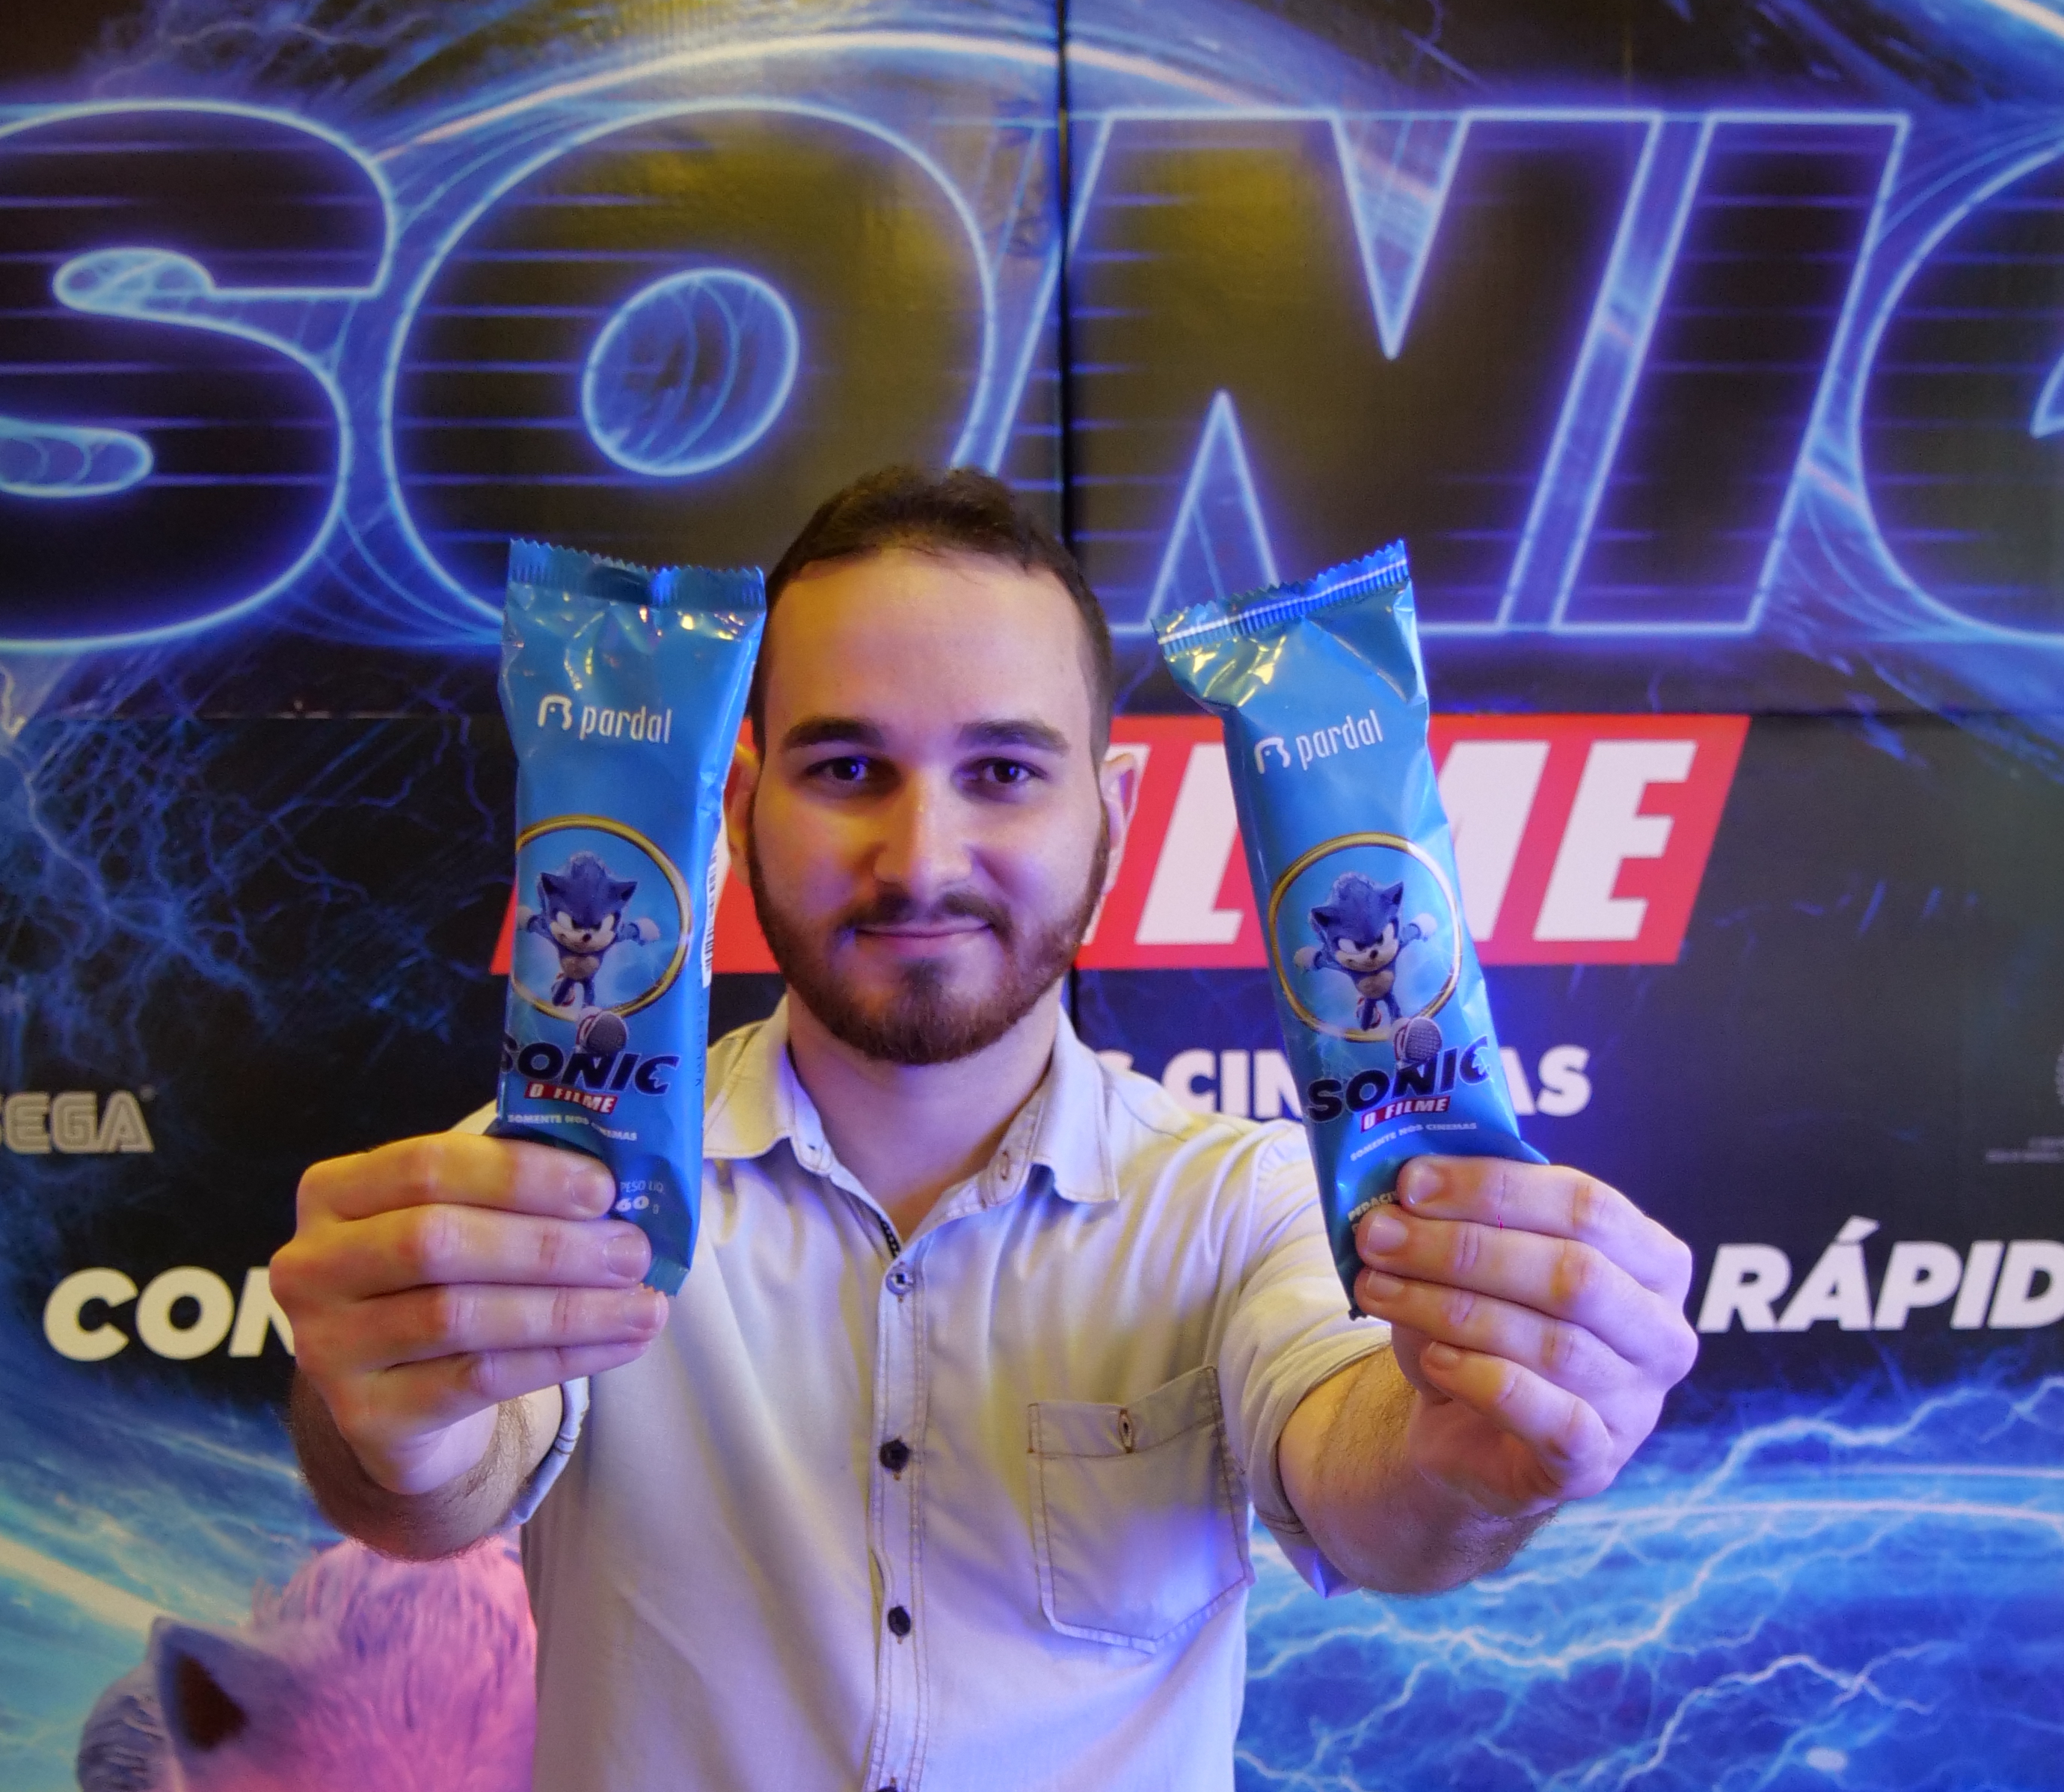 Pardal Sorvetes inova e lança embalagem exclusiva para o filme “SONIC”, no Iguatemi Fortaleza